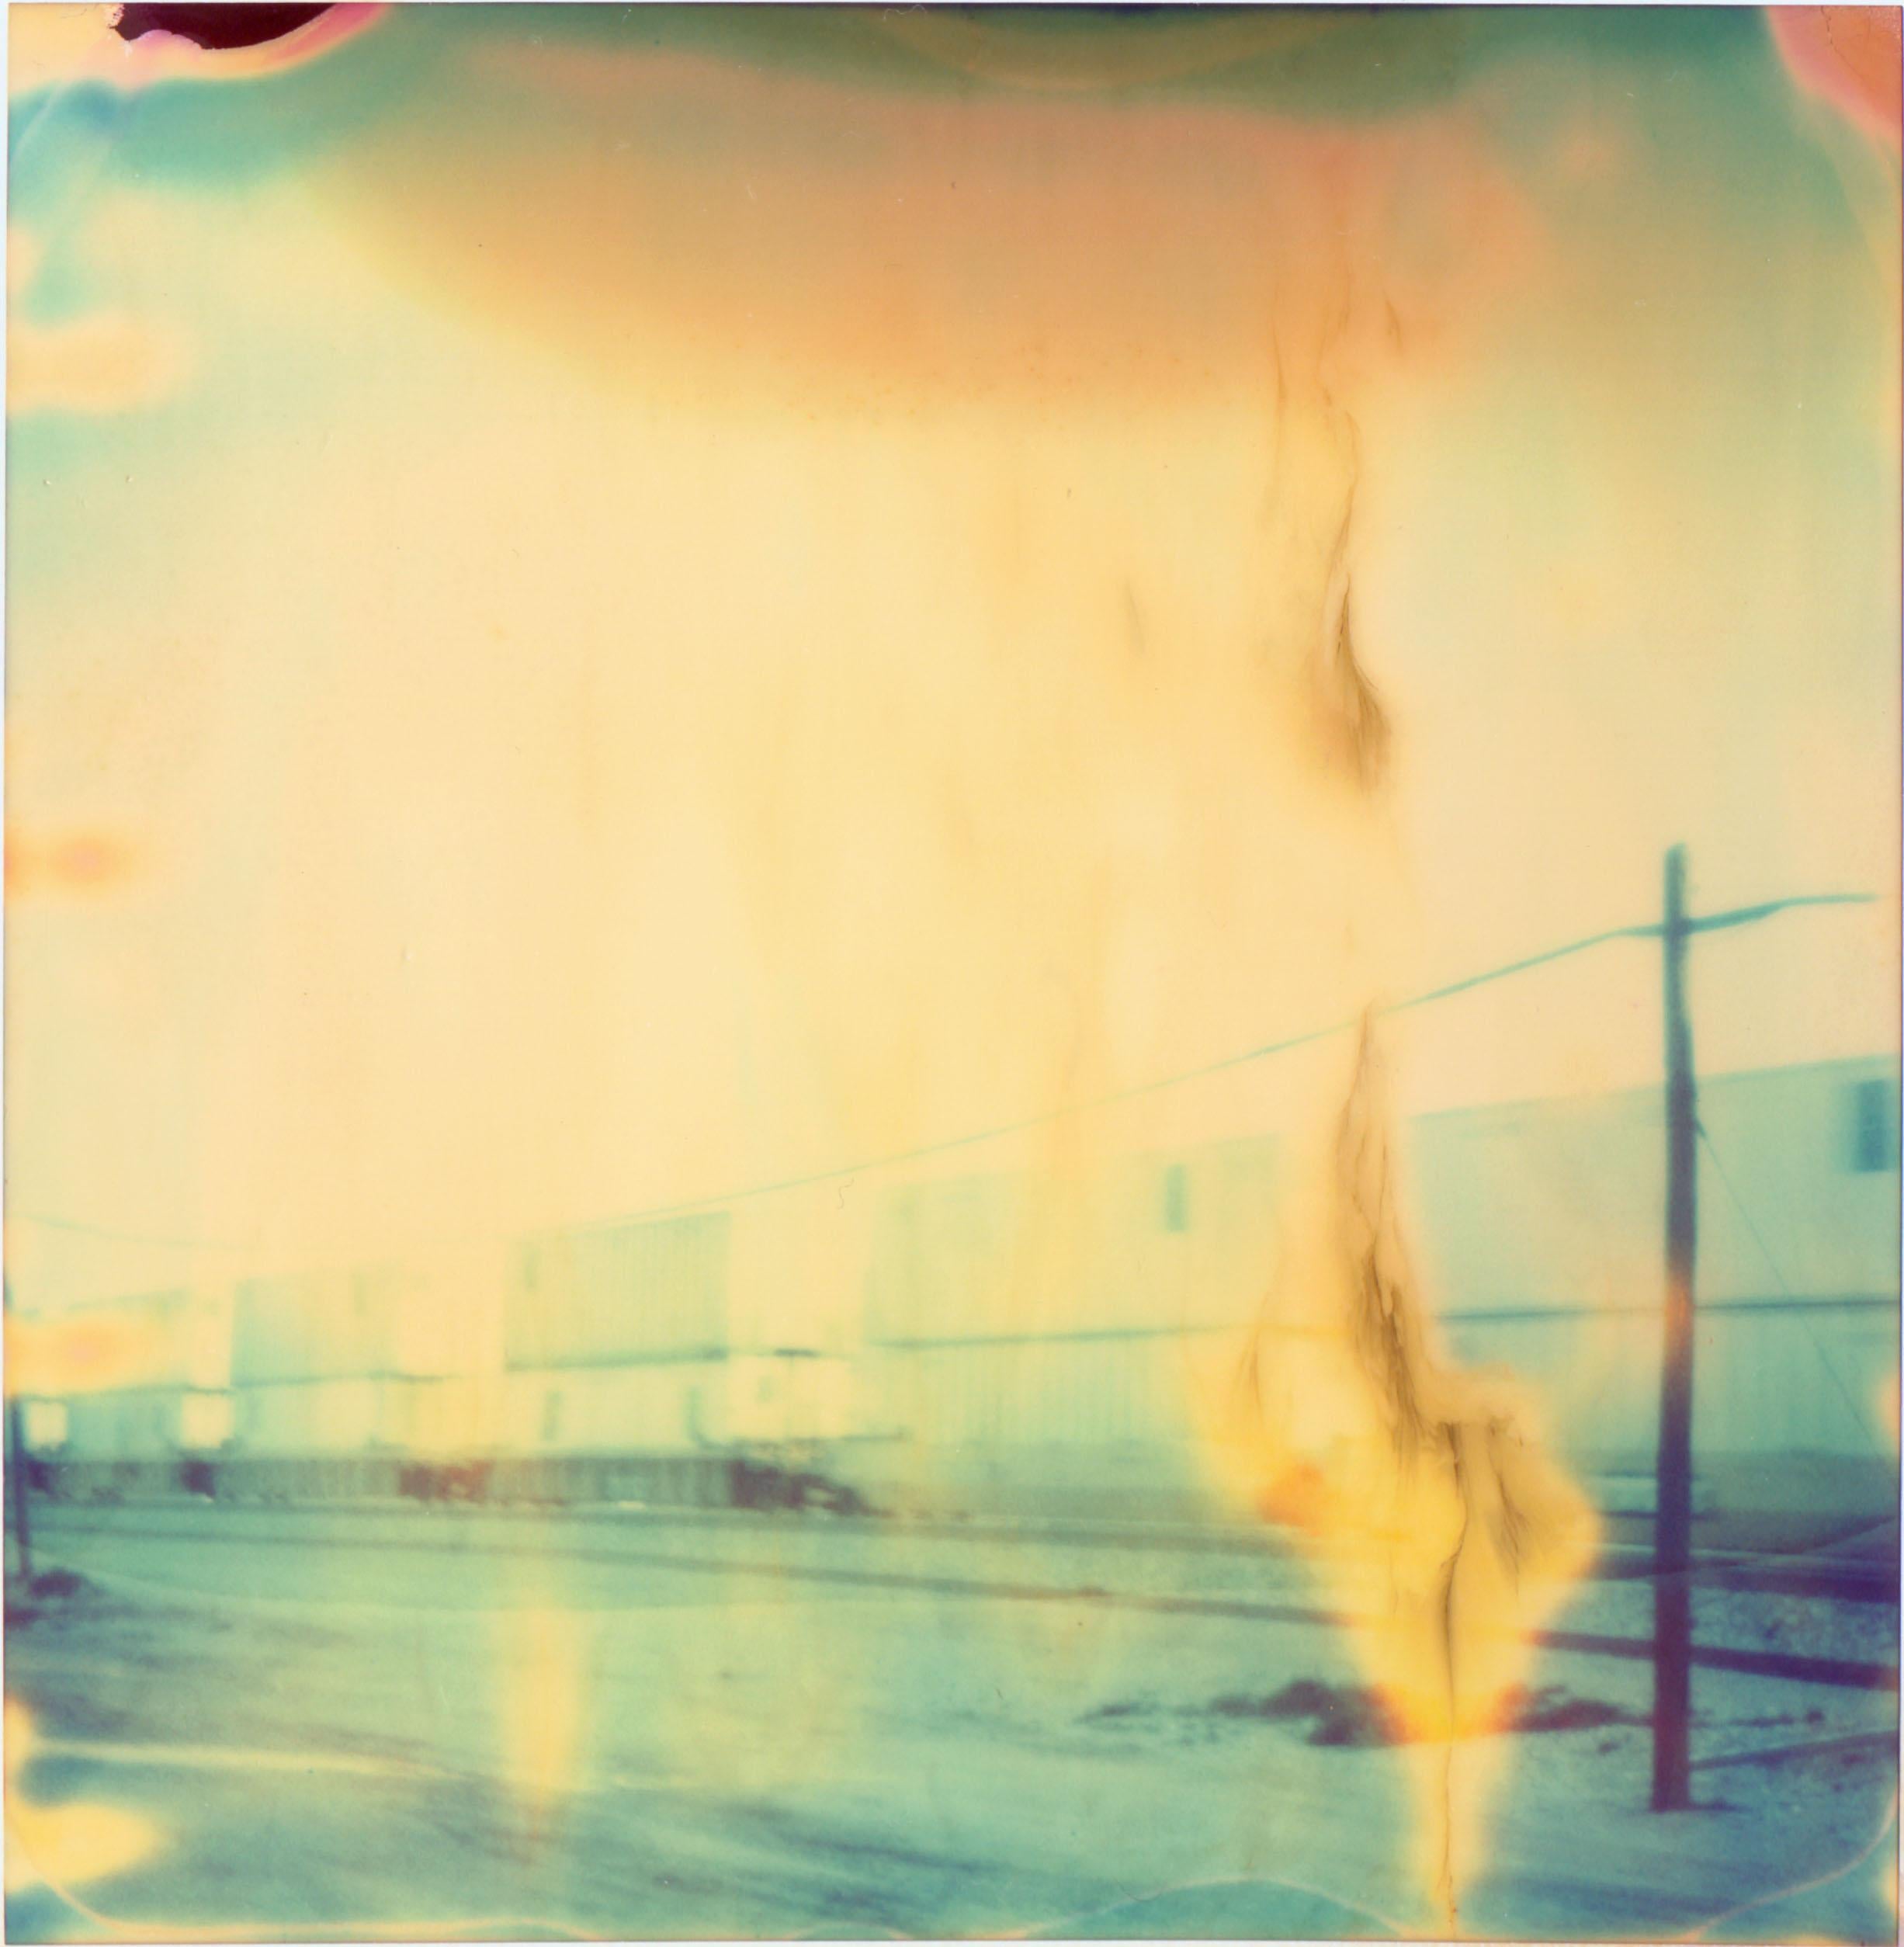 Stefanie Schneider Abstract Photograph - Untitled (Traintracks) - based on a Polaroid